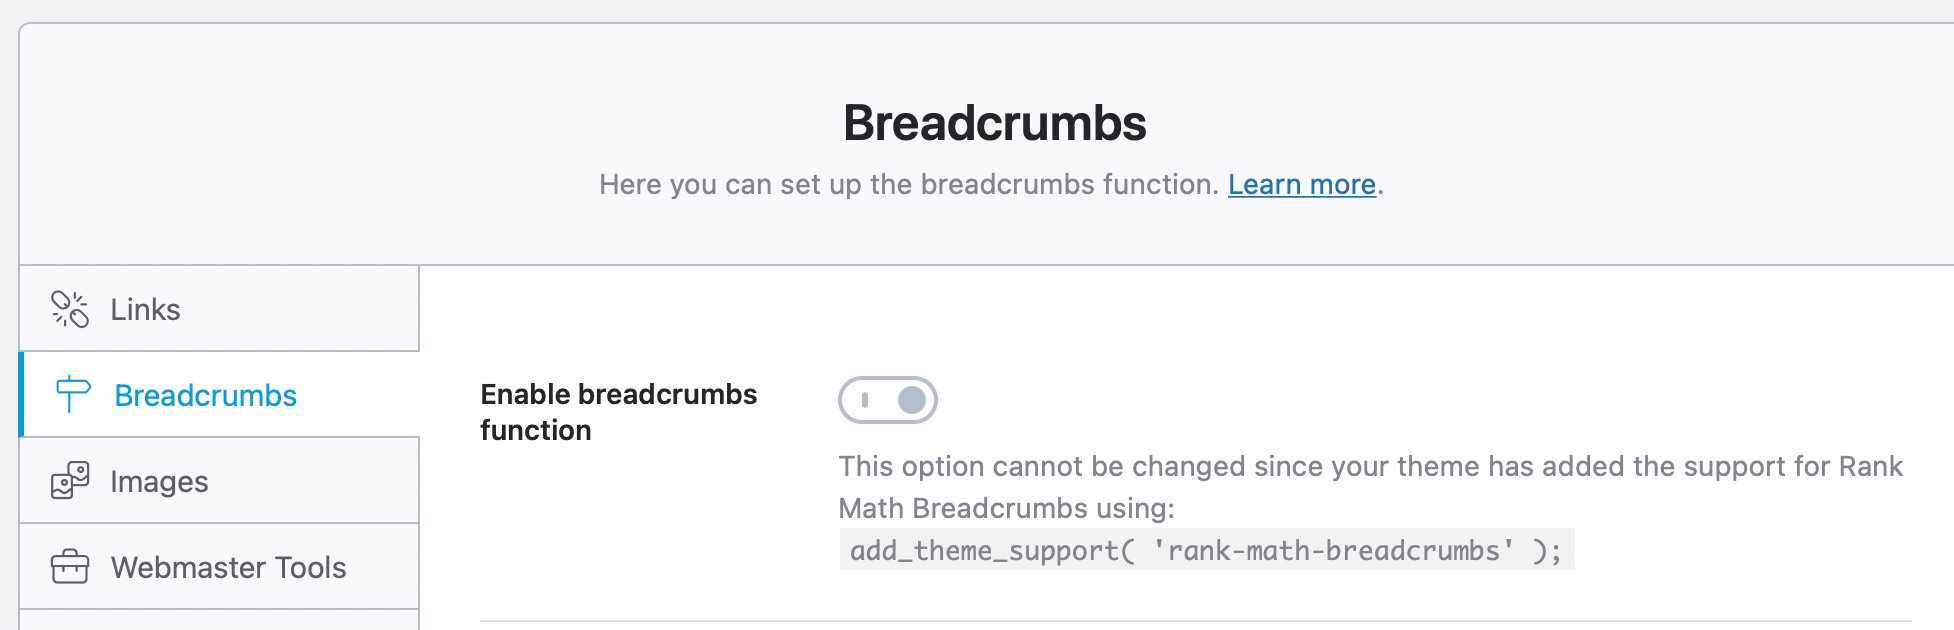 Breadcrumbs settings